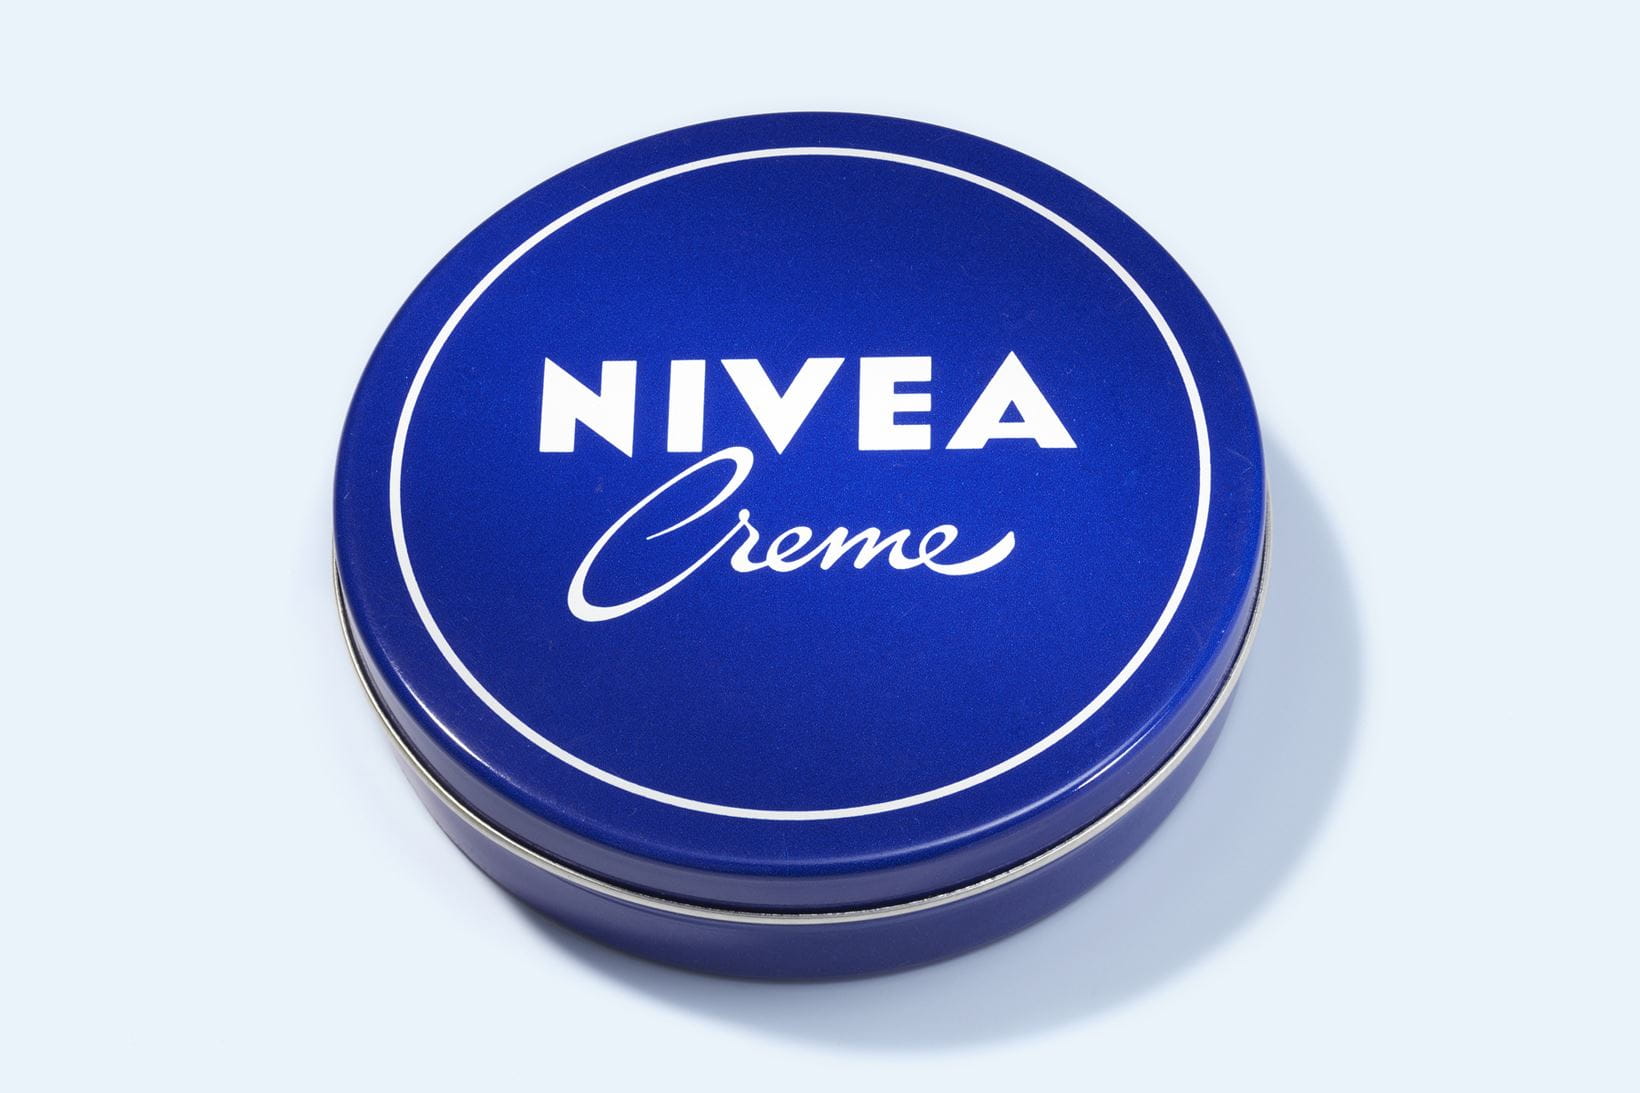 *NIVEA Creme* 1959